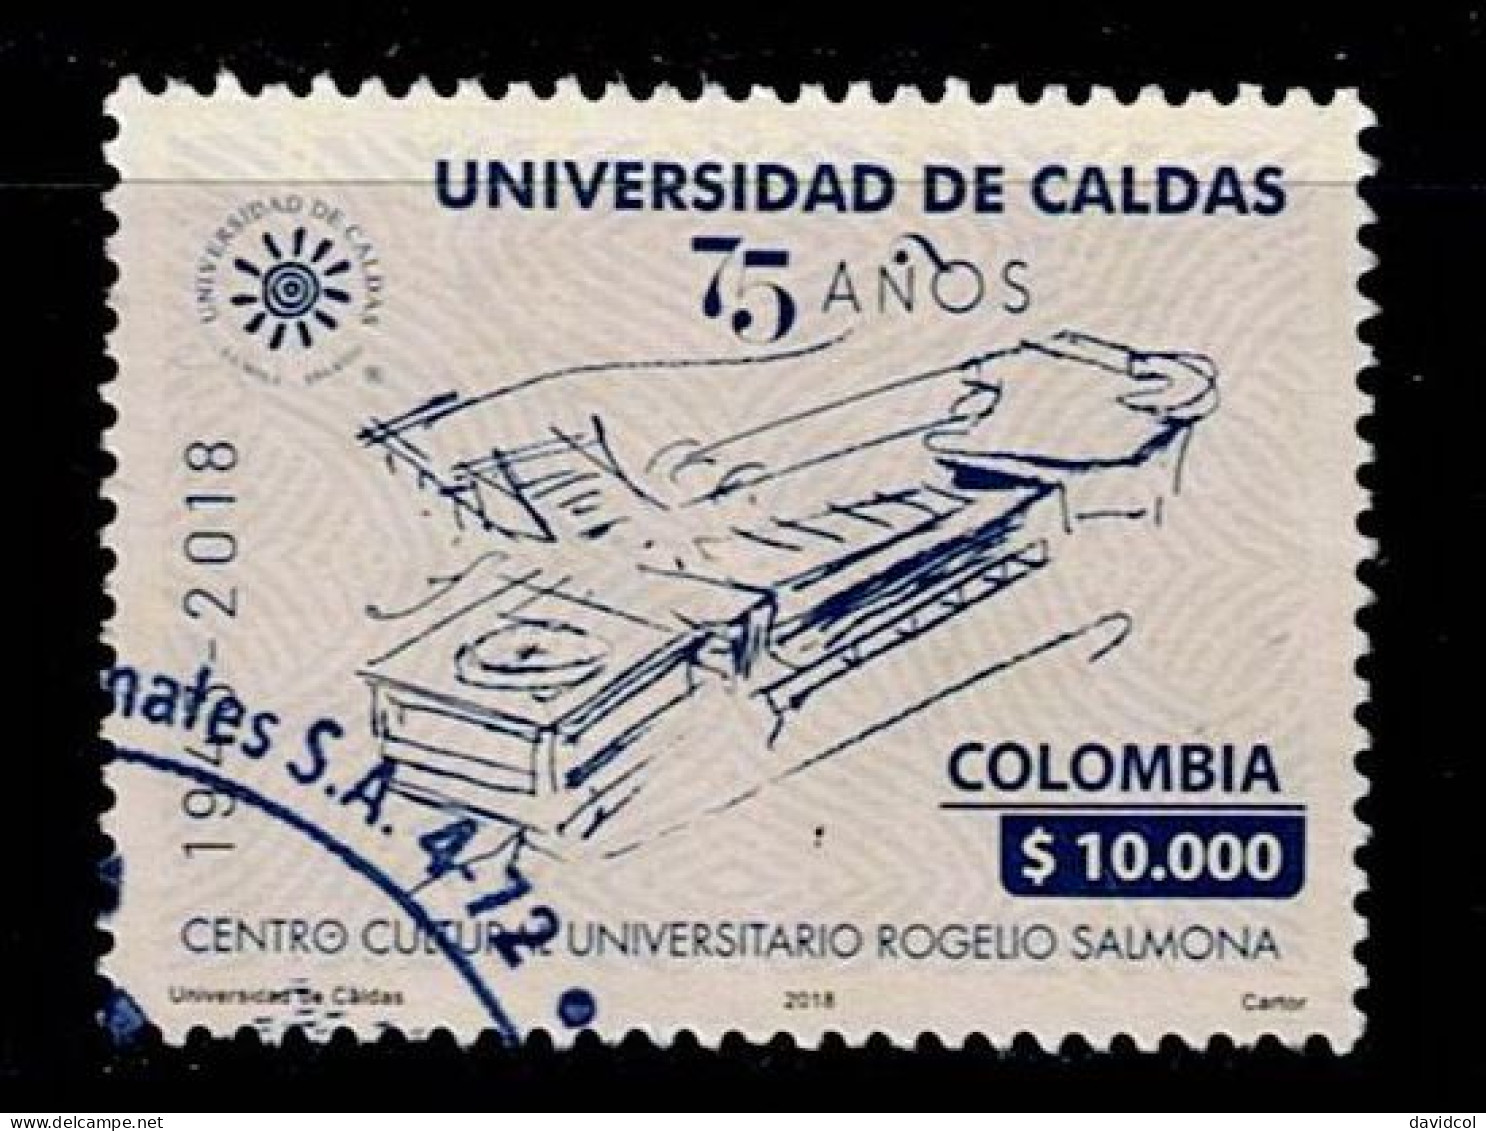 0066K-KOLUMBIEN - 2018 – MNH – 75TH ANNIVERSARY OF CALDAS UNIVERSITY - Kolumbien